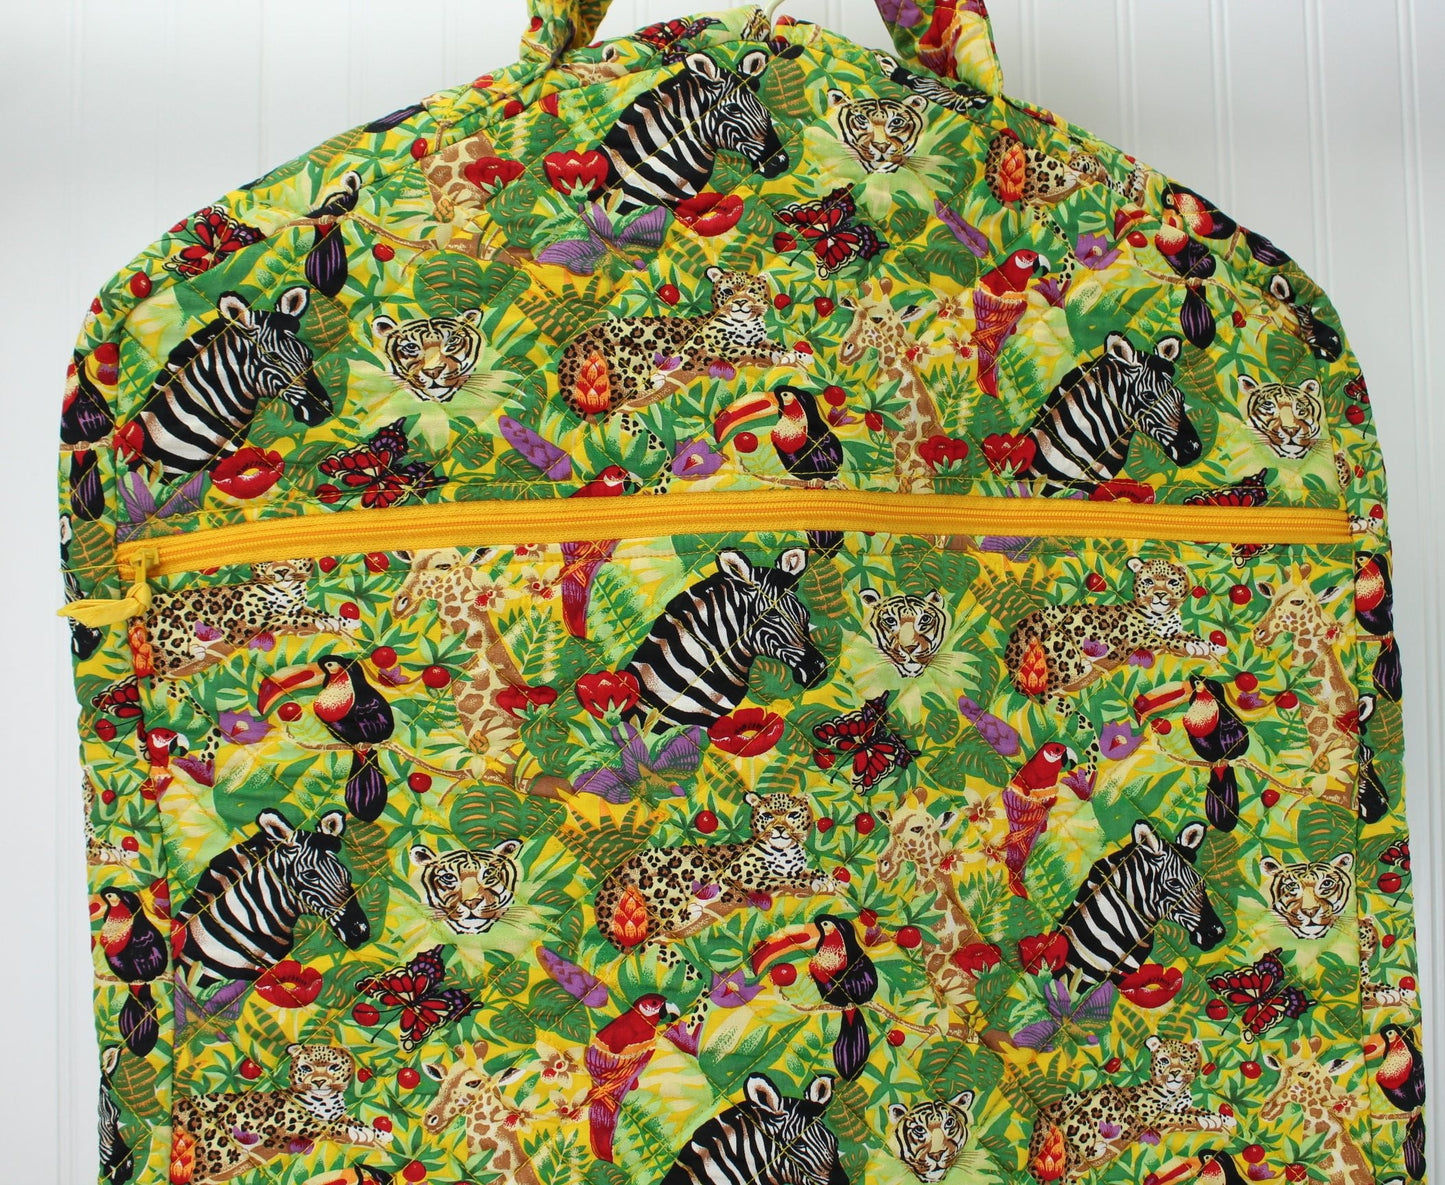 Unbranded Jungle Scene Fabric Garment Carrier Hanging Overnighter - Zebra Toucan bright vibrant colors